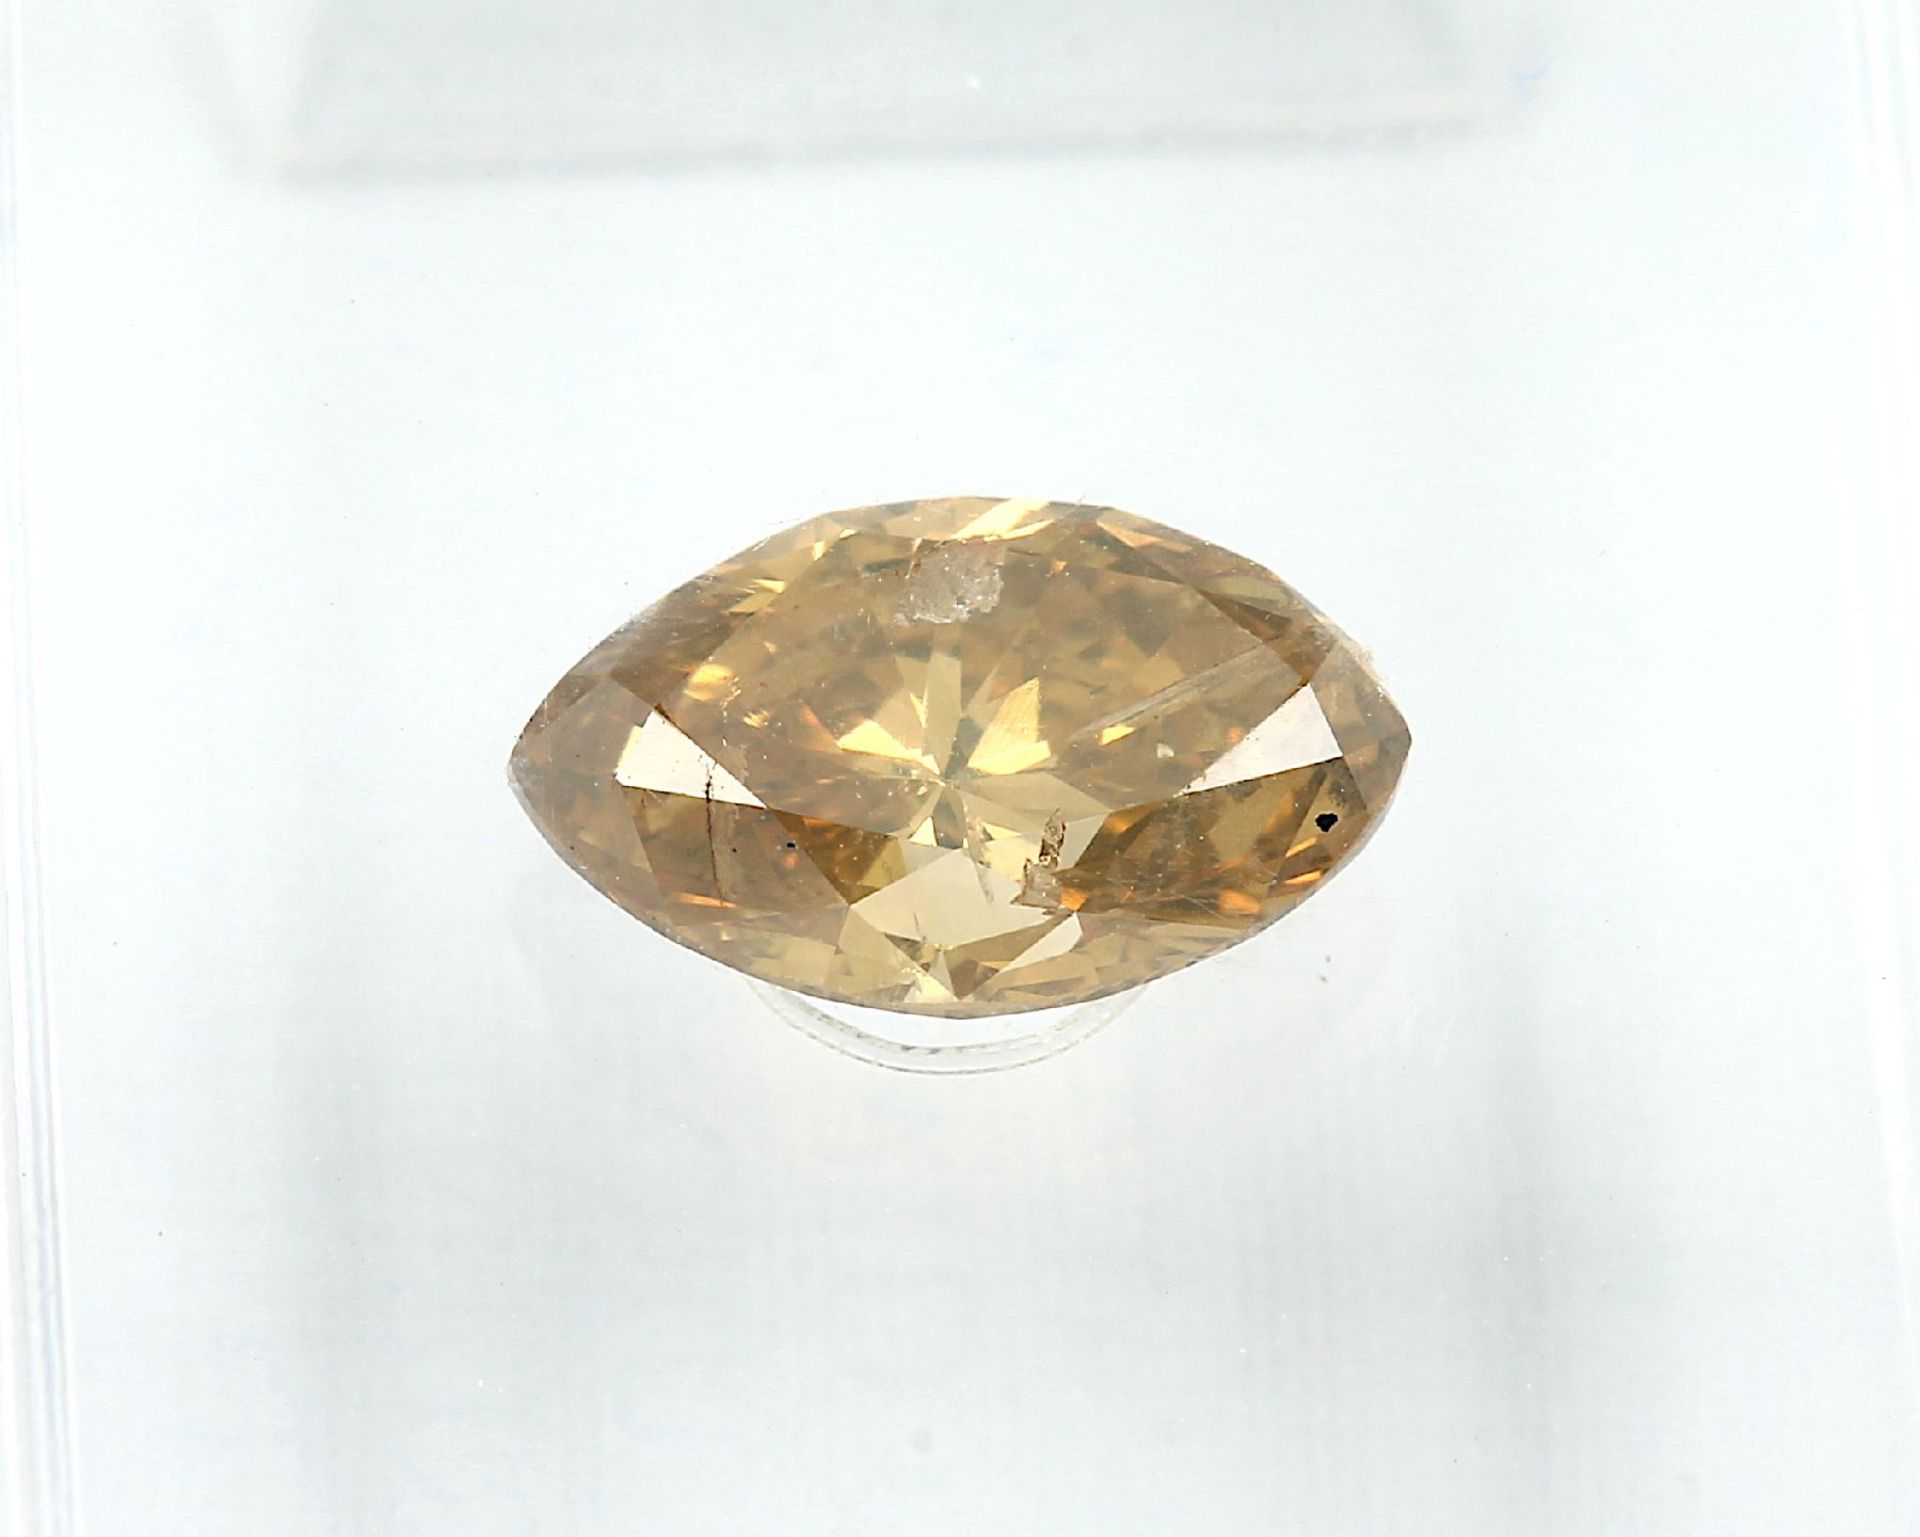 Lose Diamantnavette, 0.67 ct, 7.29 x 4.69 x3.18 mm, natural fancy deep brownish orangy yellow, - Bild 3 aus 3